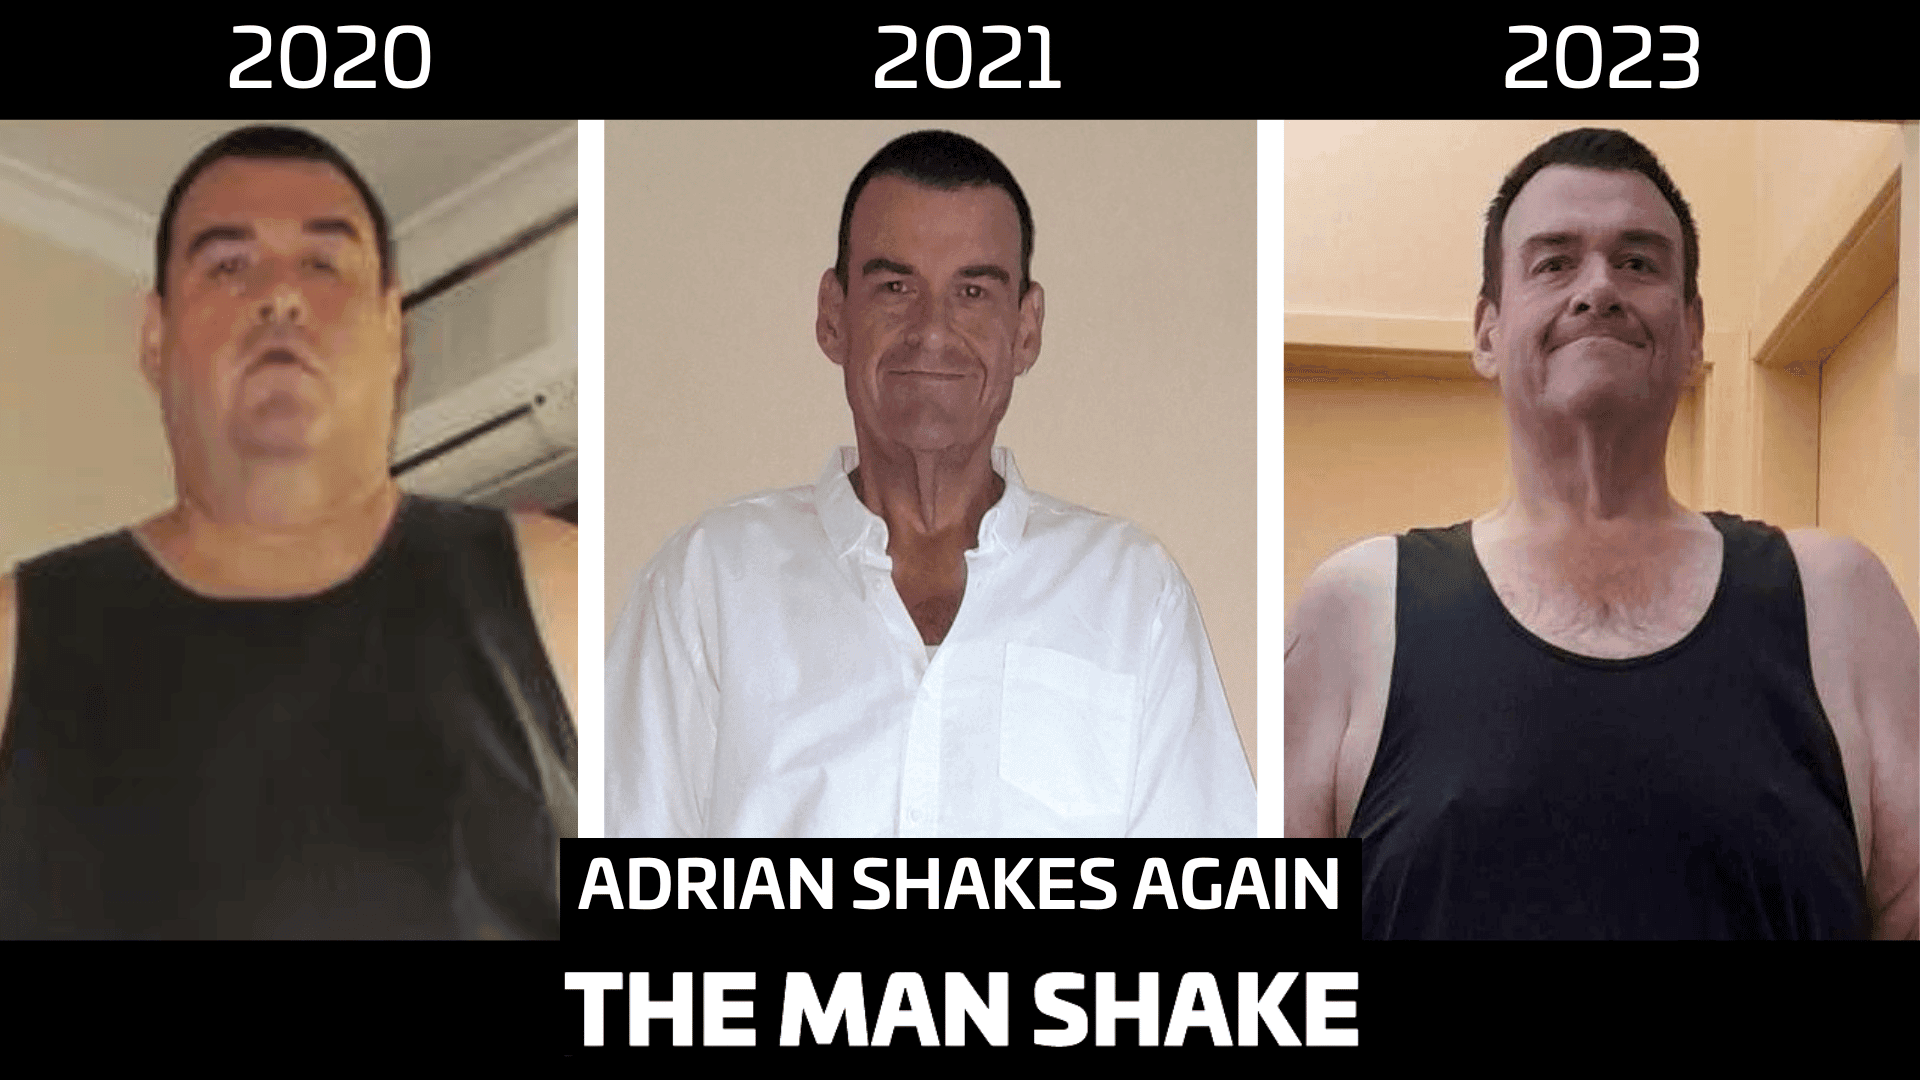 Adrian Shakes Again: "That All Too Familiar Path of No Return"